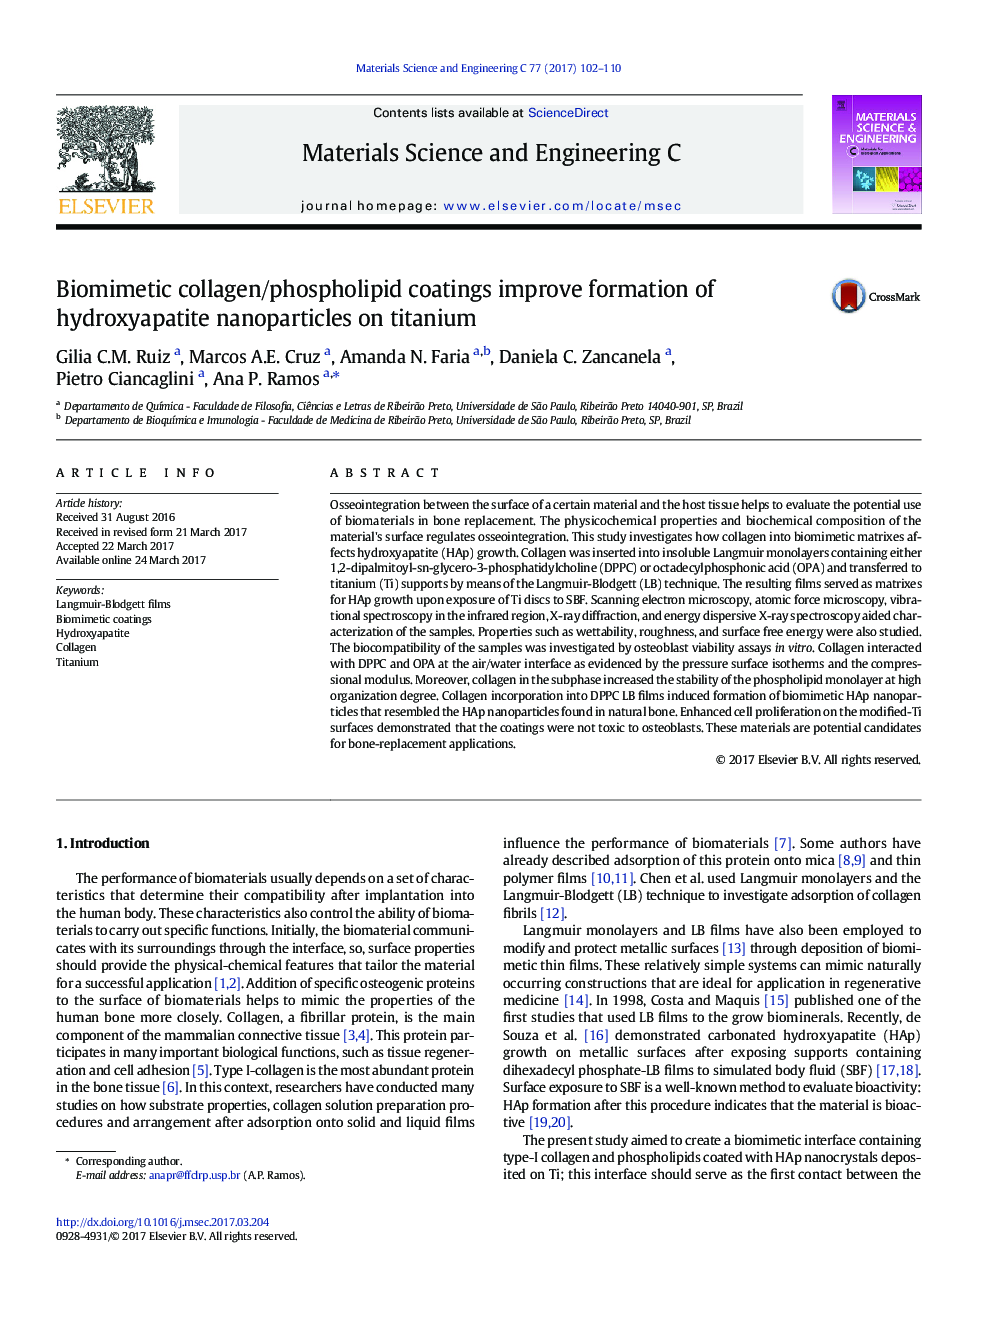 Biomimetic collagen/phospholipid coatings improve formation of hydroxyapatite nanoparticles on titanium